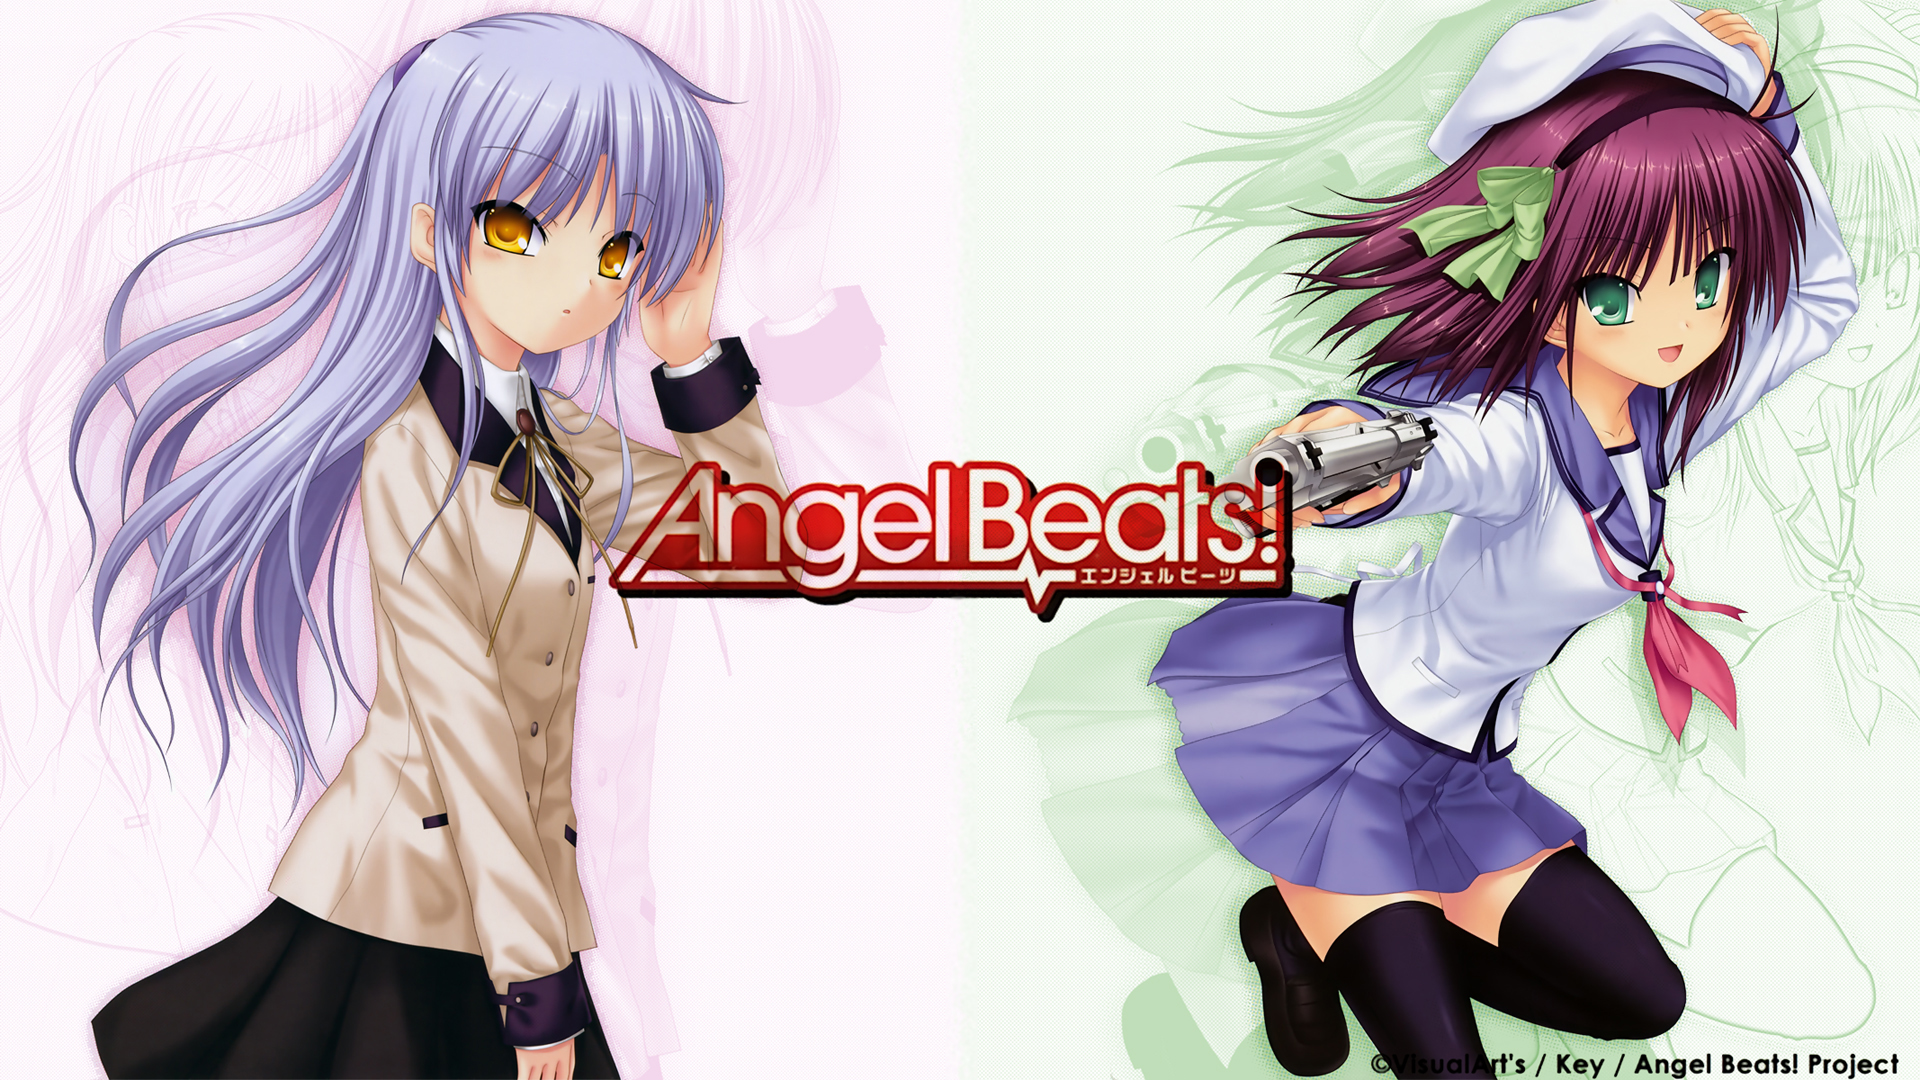 Angel Beats!, Tachibana Kanade, Накамура Юрий - обои на рабочий стол